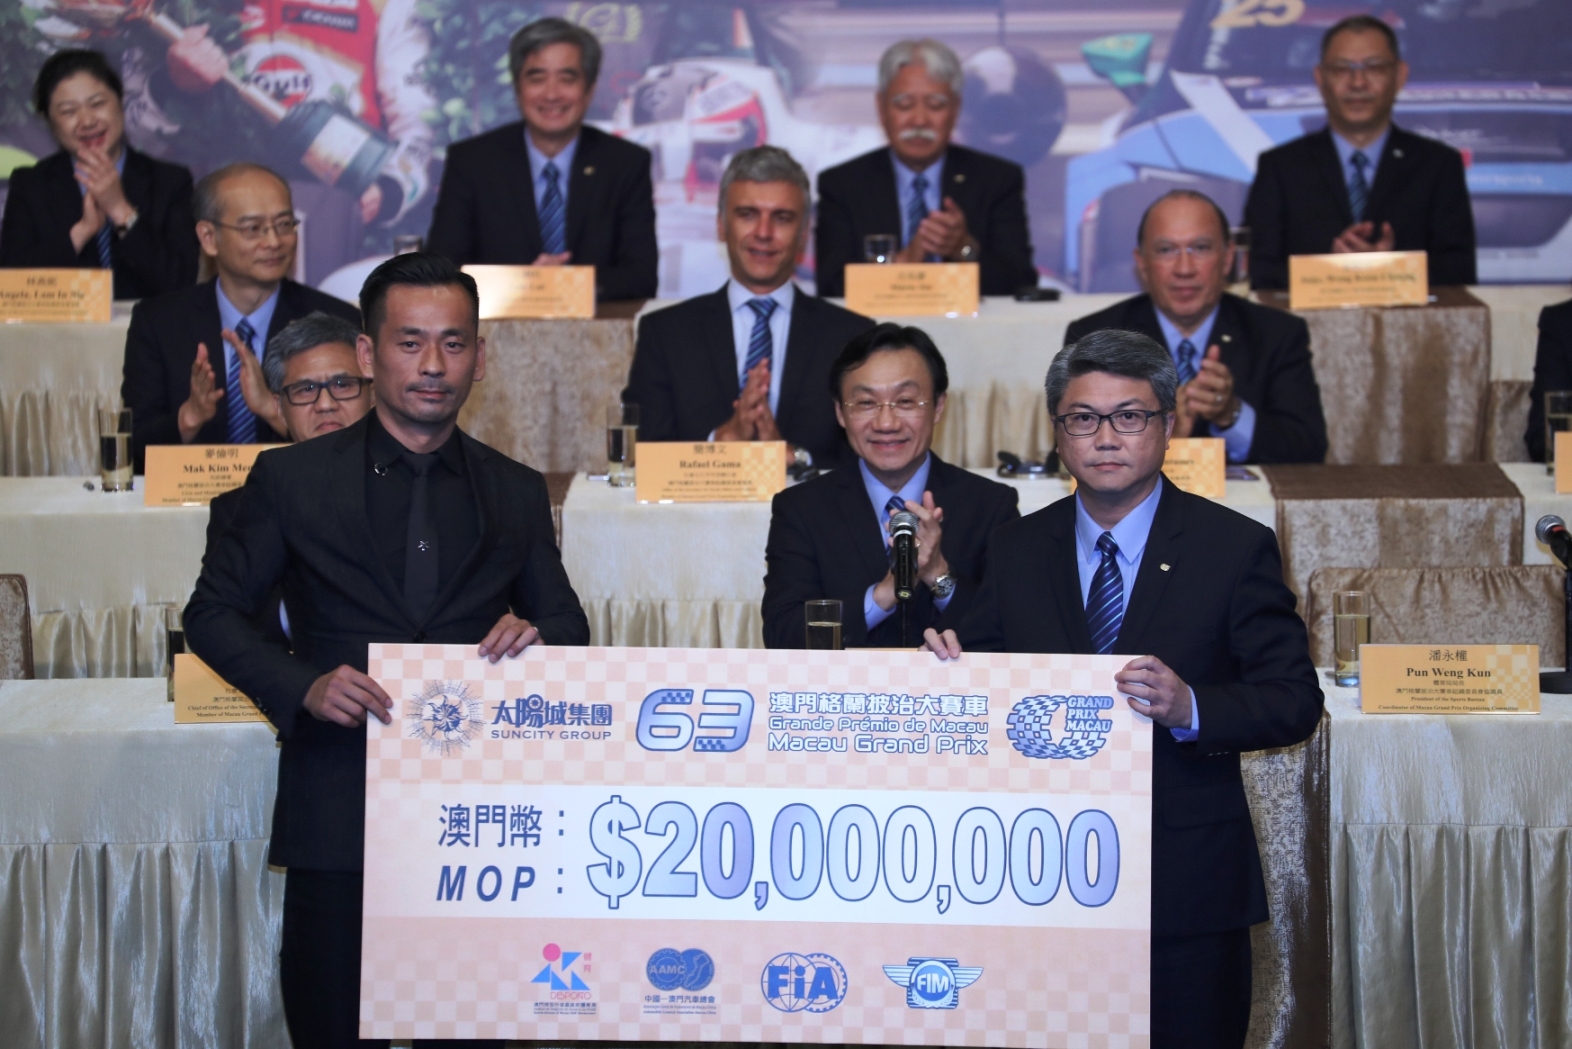 2016 Macau Grand Prix to cost MOP 200 million